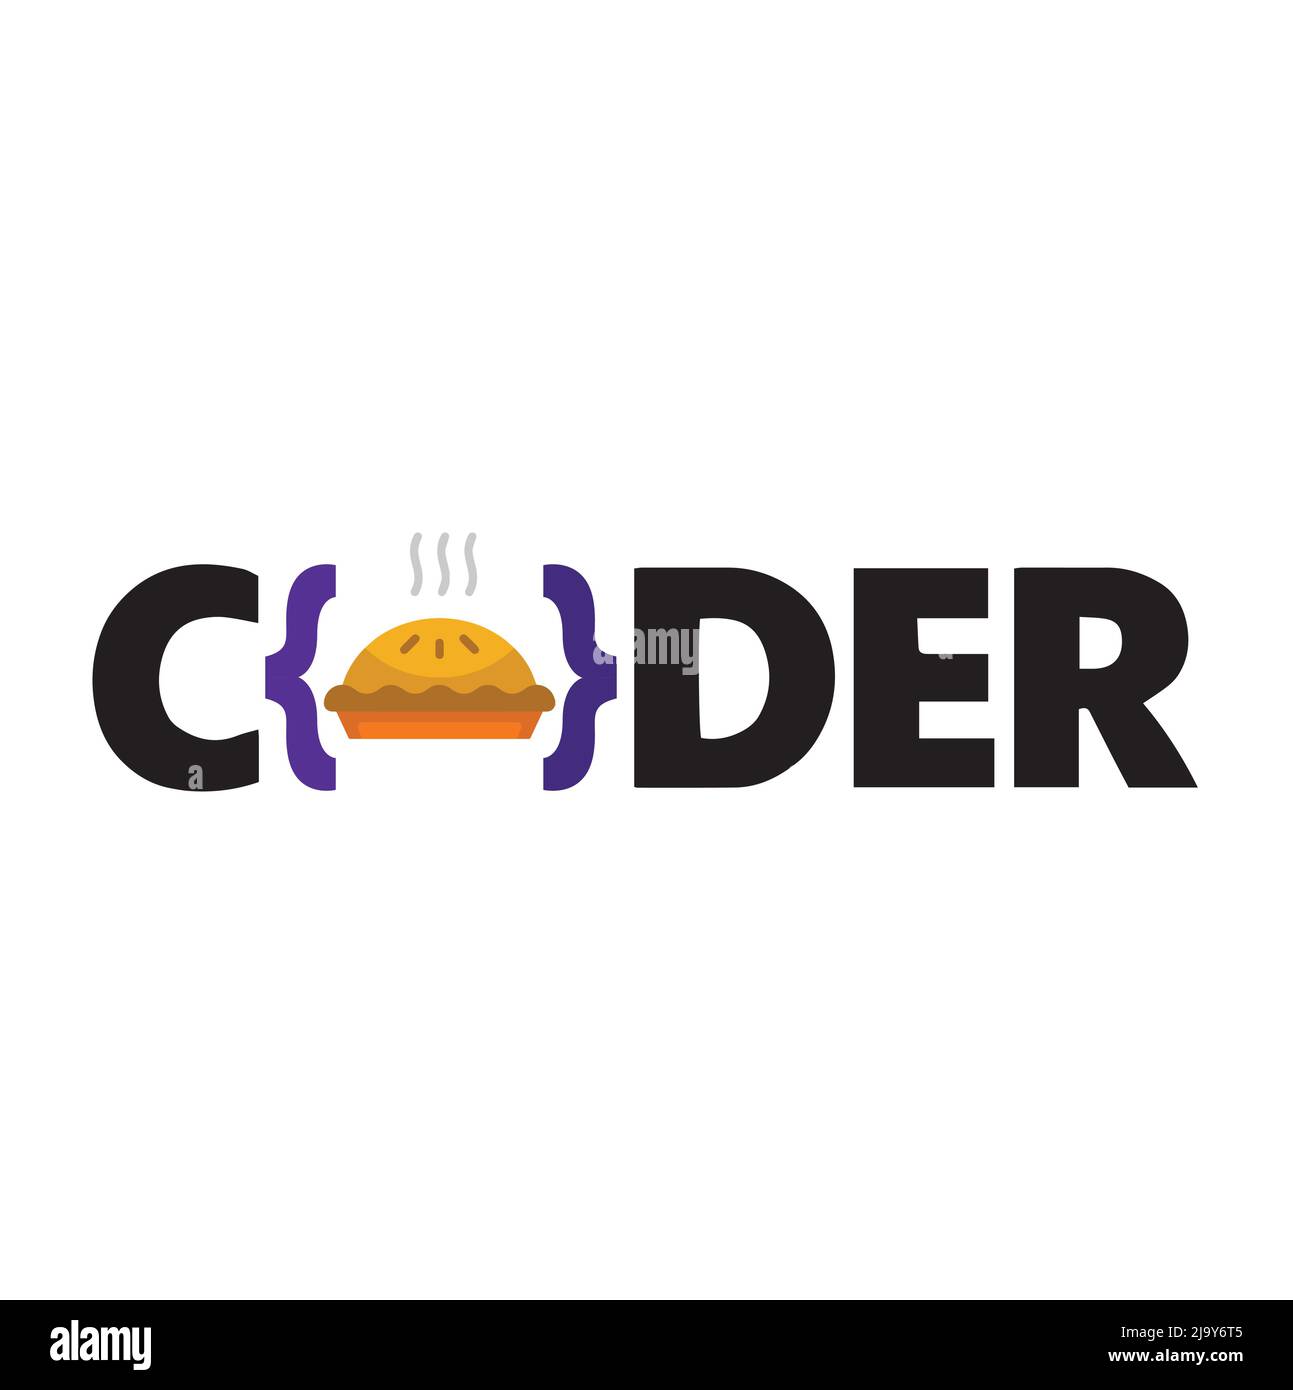 Coder illustration logo. Programmer logo. Coder Idea Symbol For Programming Specialist, Web Developer, Coder, Programmer, etc. Stock Vector